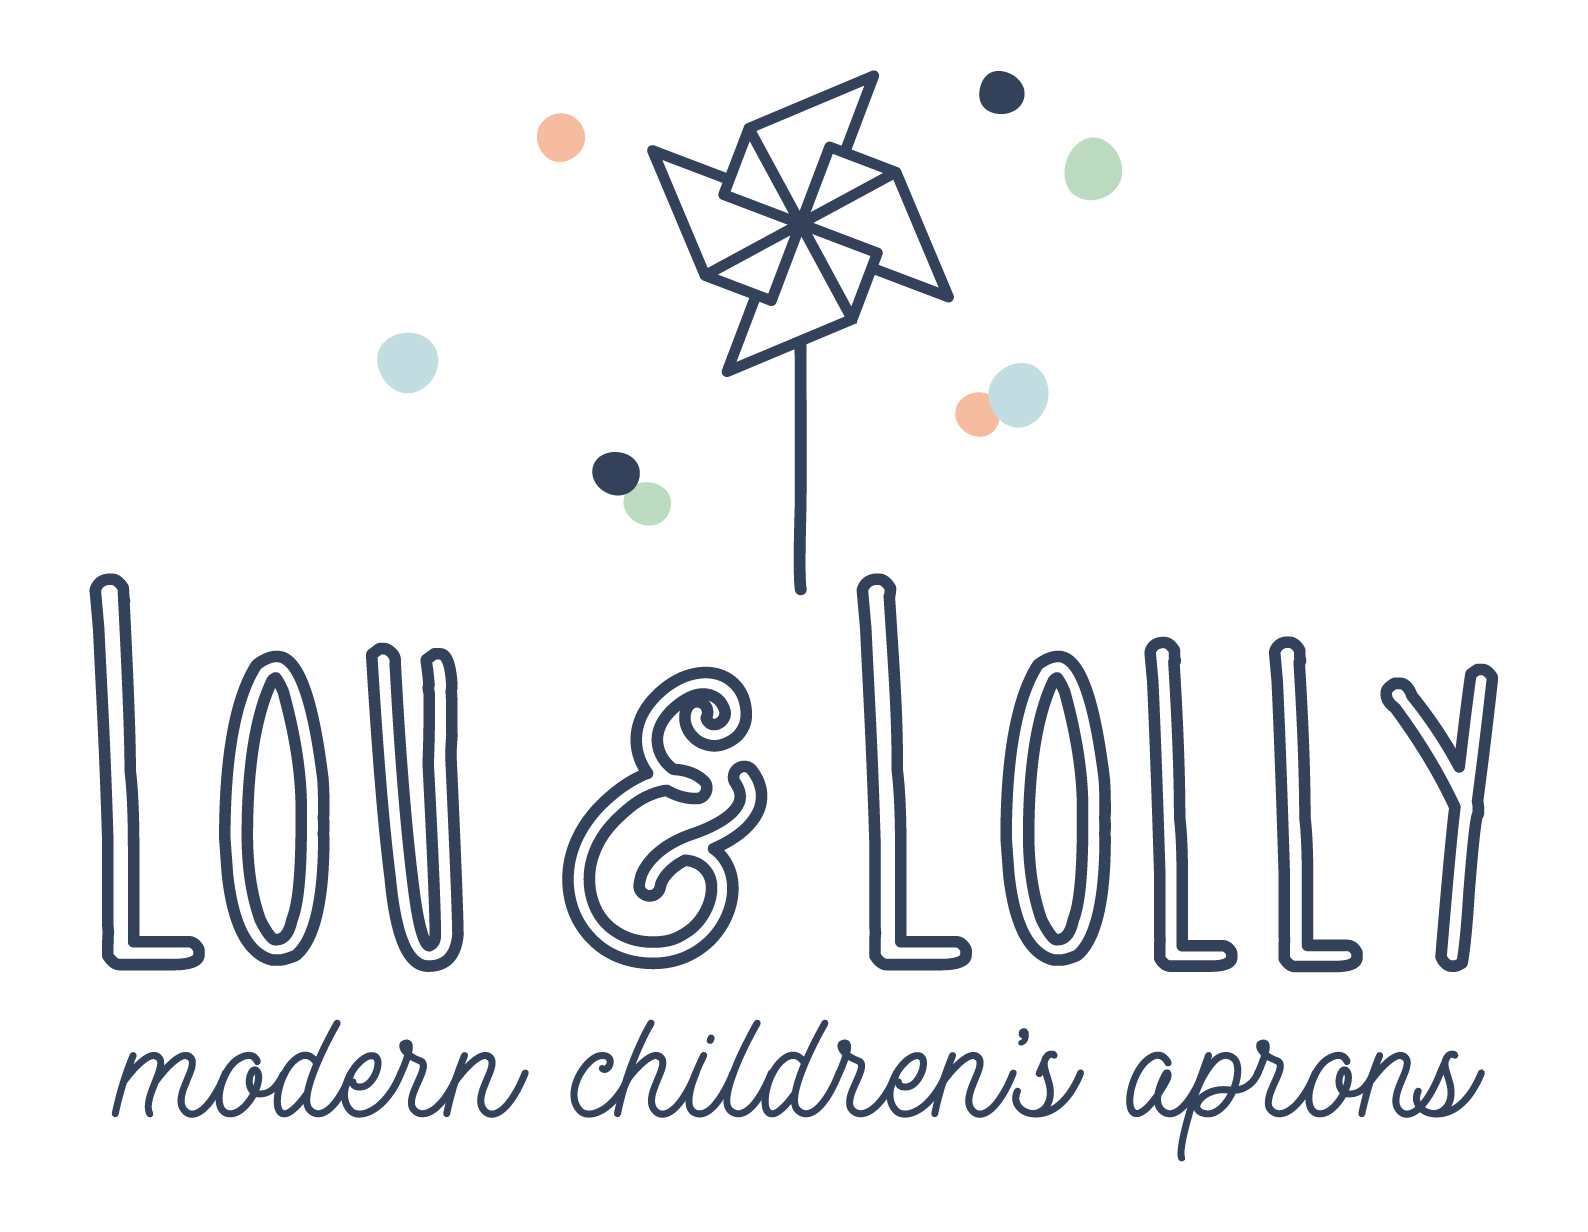 Lou & Lolly